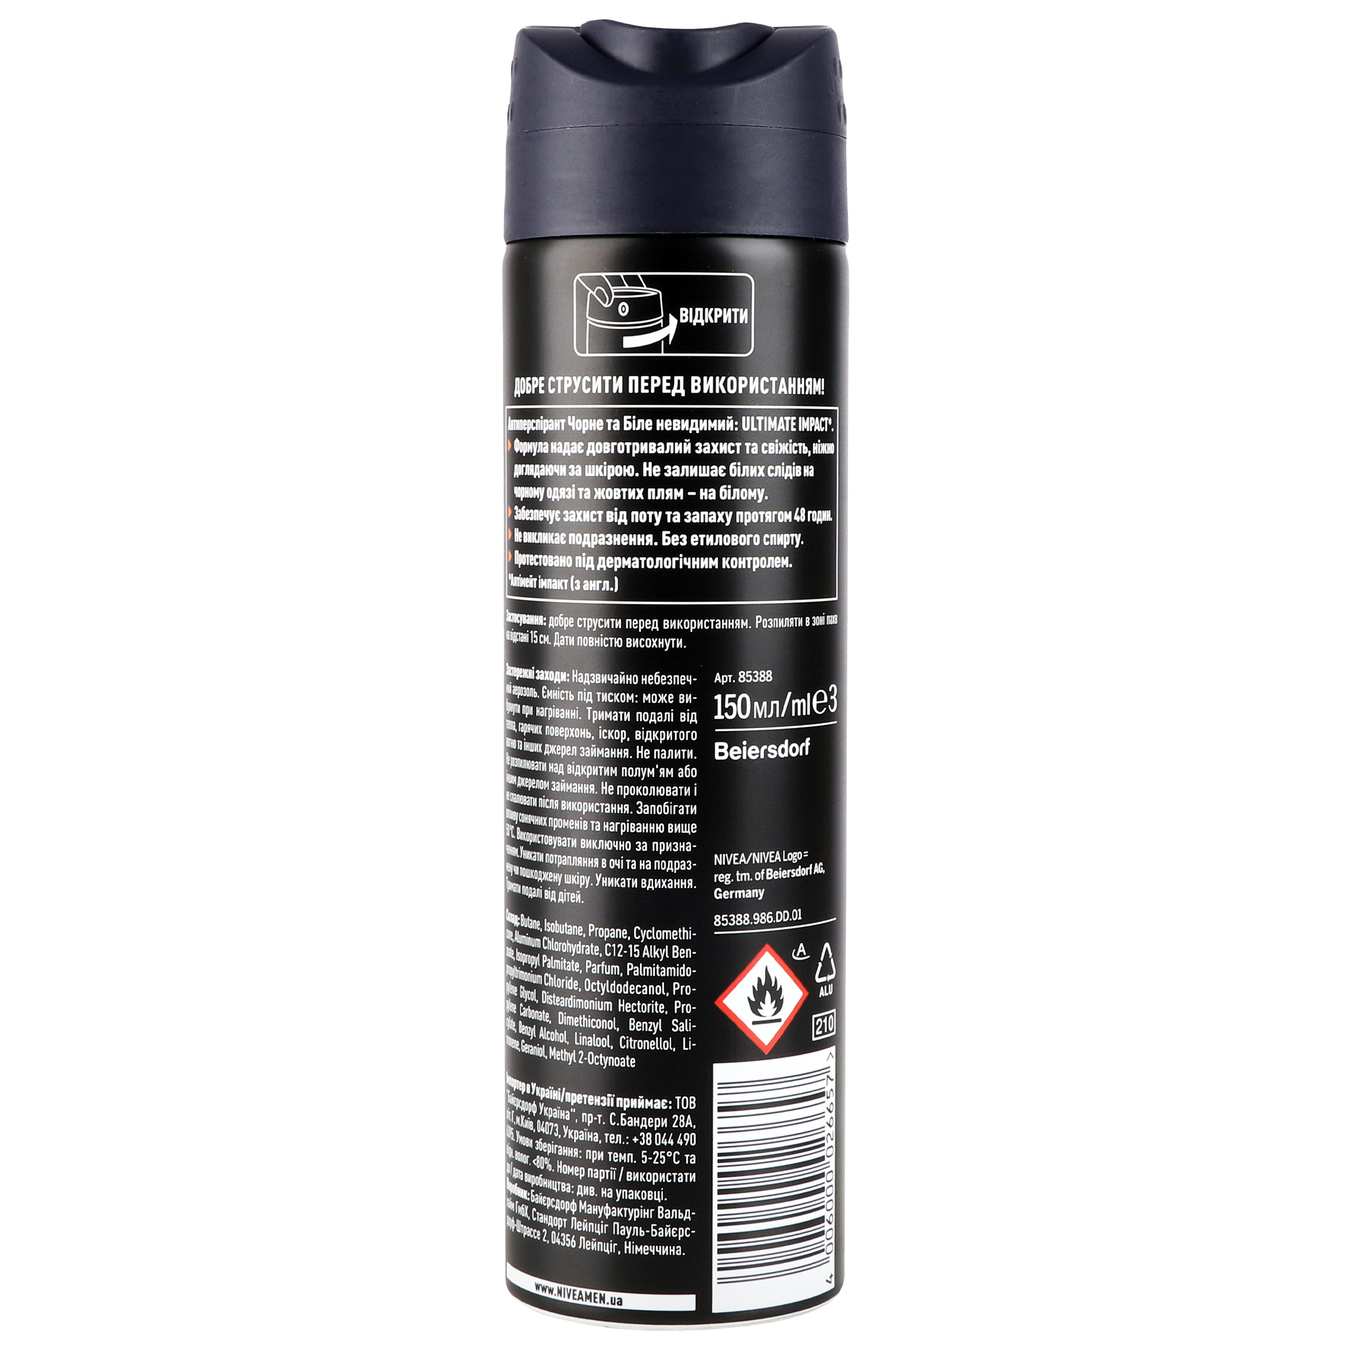 Deodorant Nivea Extra spray for men black and white invisible 150 ml 4